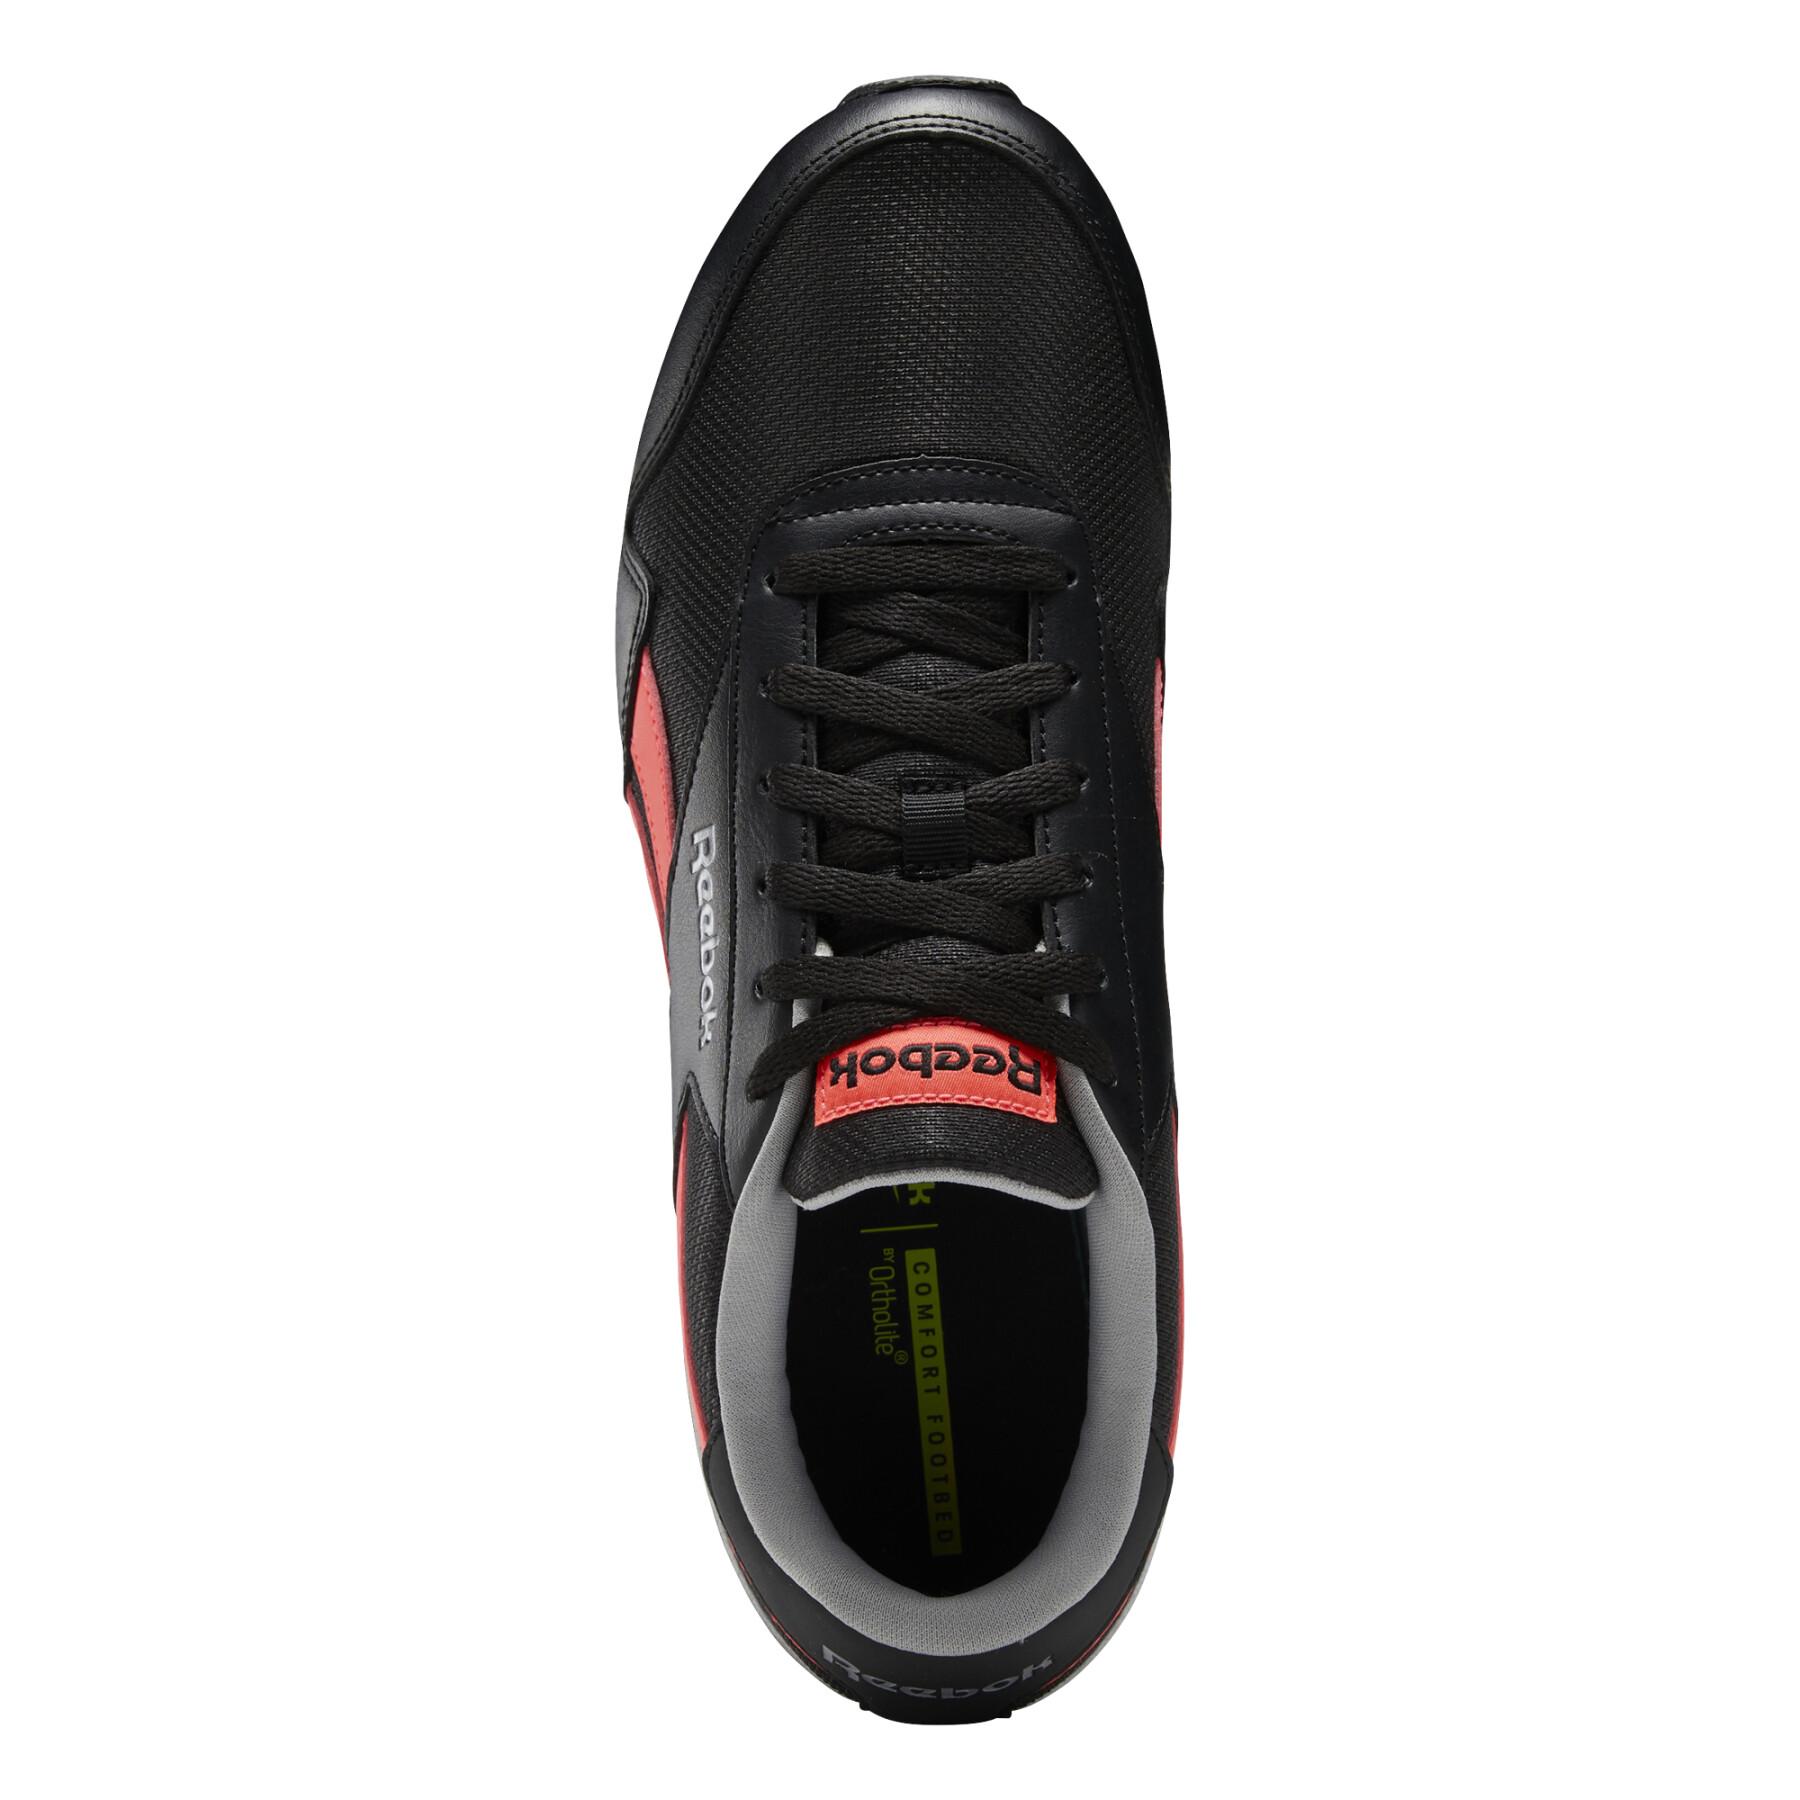 Schuhe Reebok Royal Jogger 3.0